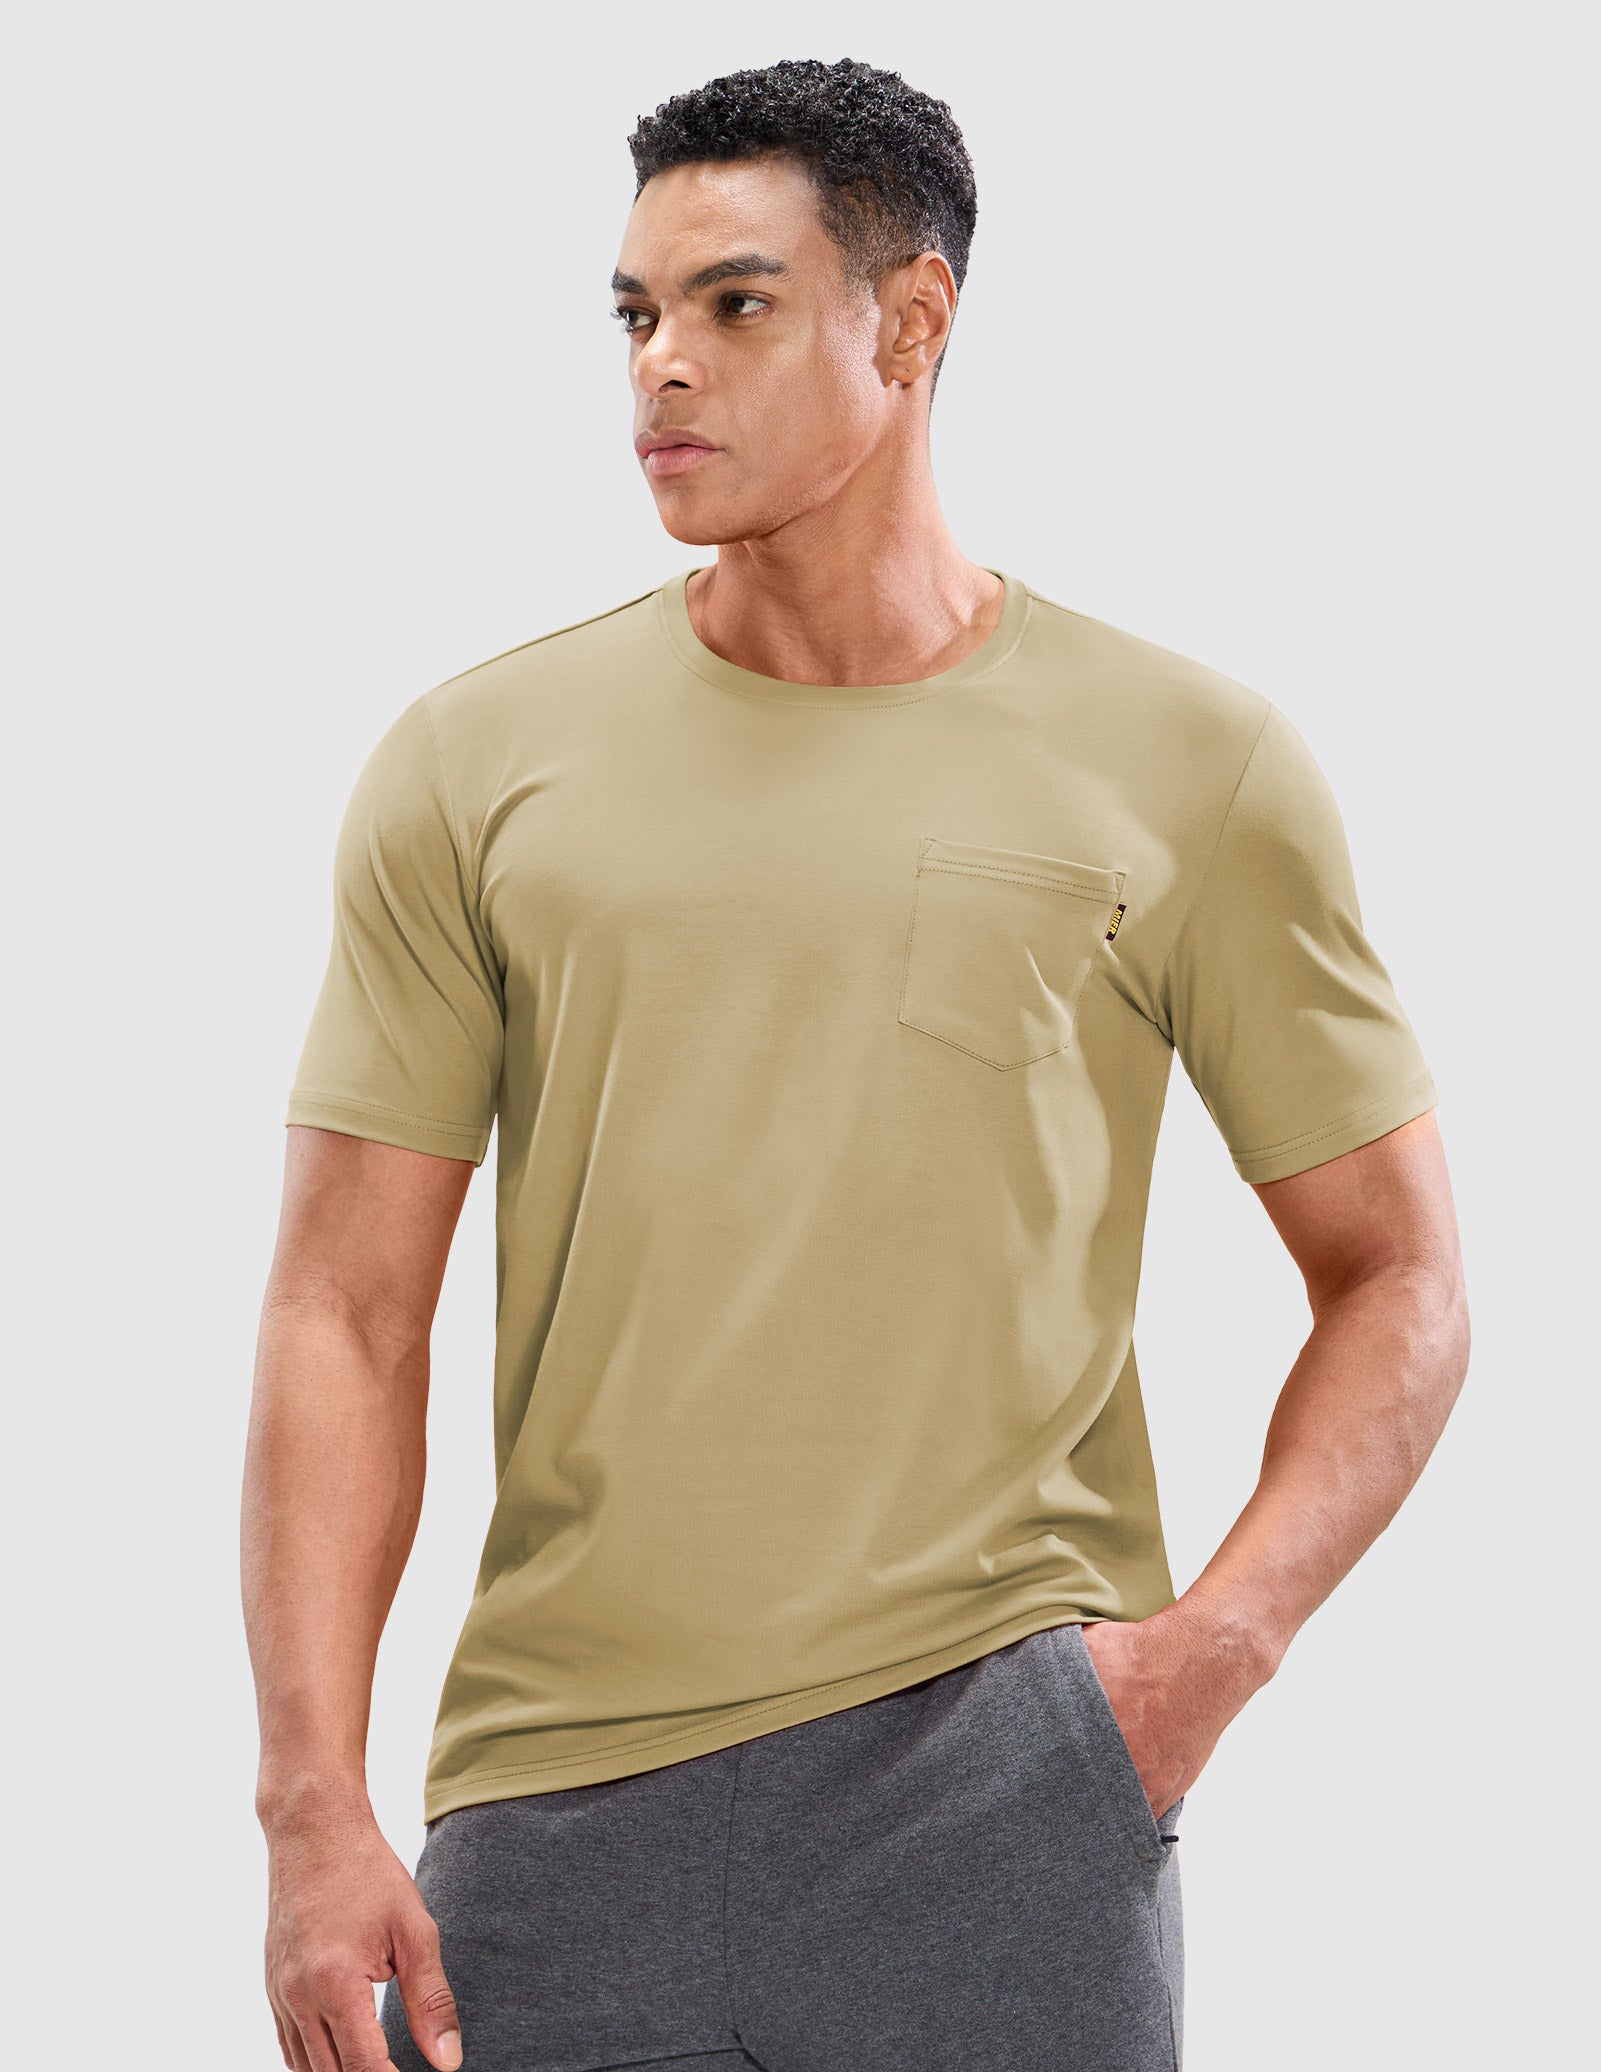 Men's Cotton T-Shirts with Pocket Soft Crewneck Tee